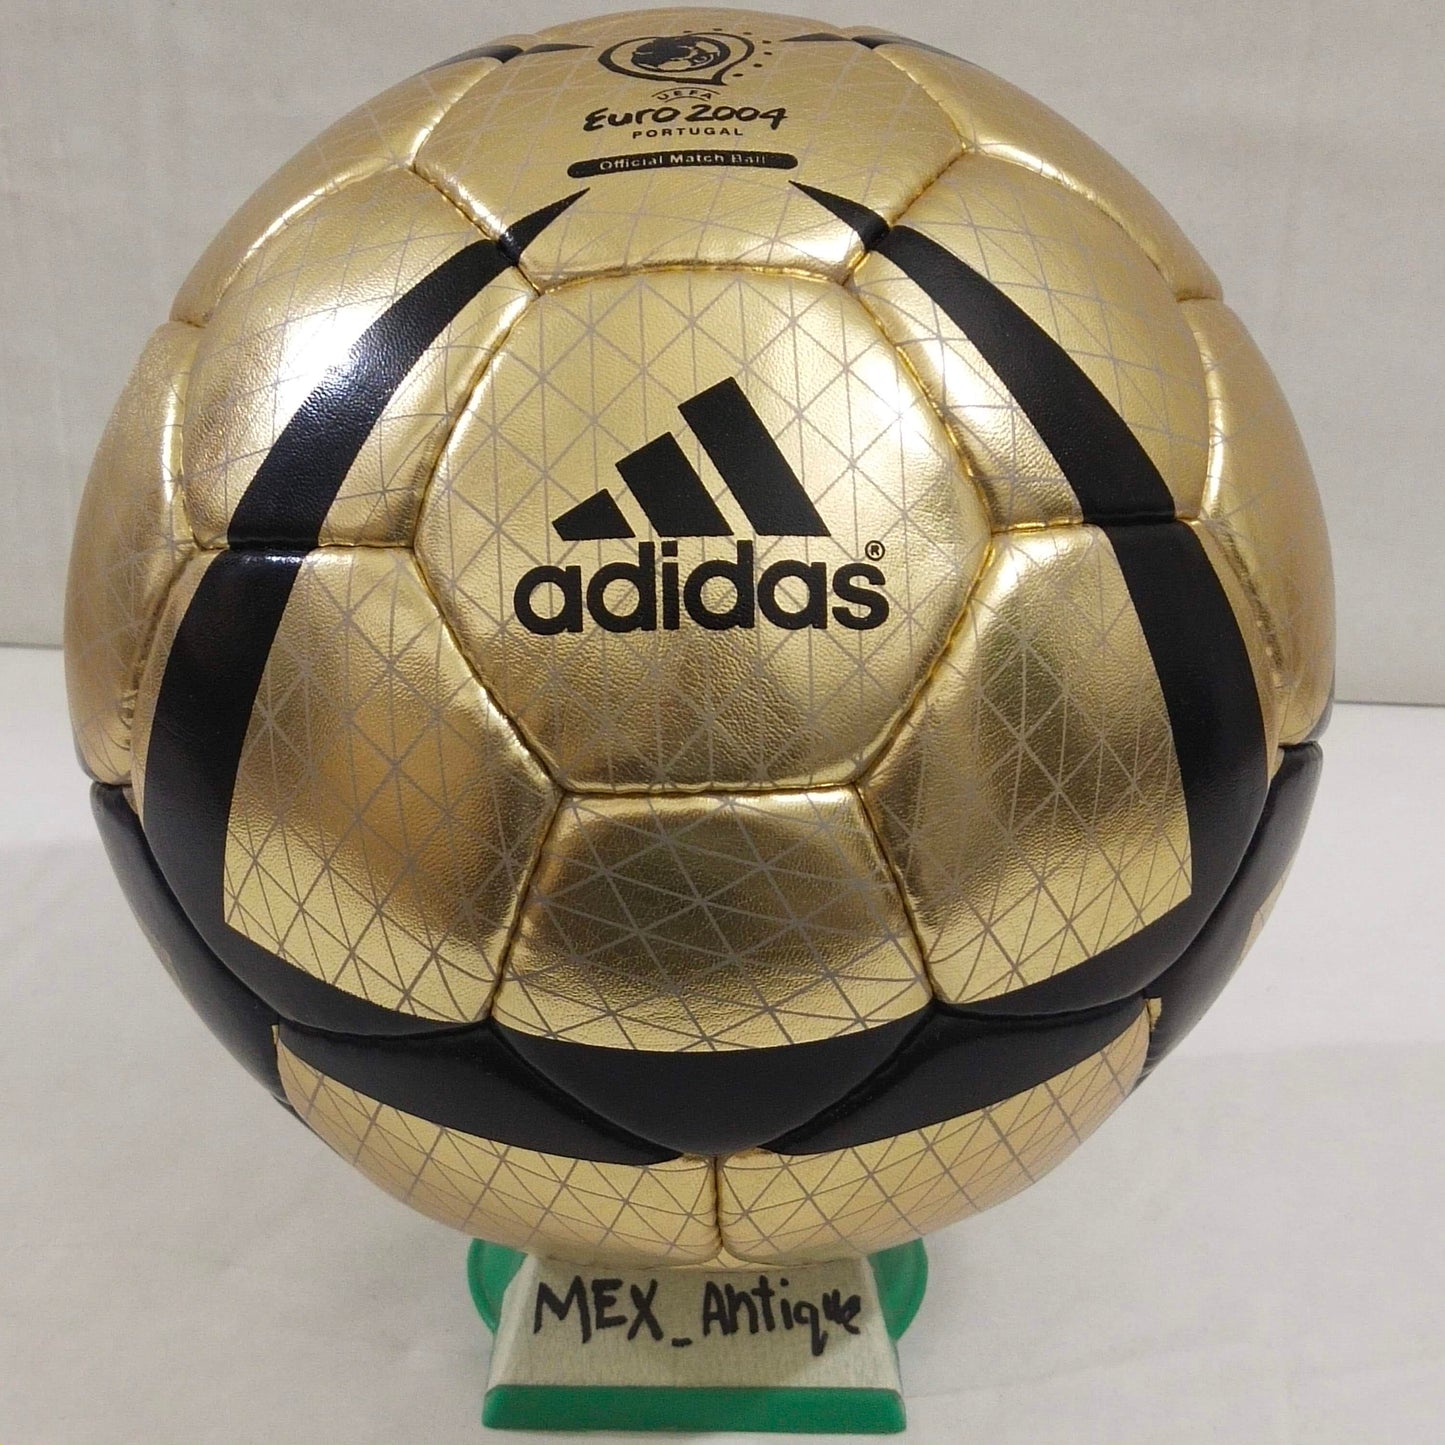 Adidas Roteiro Grand Stade | 2004 | Gold Edition | UEFA Europa League | Official Match Ball | Size 5 04